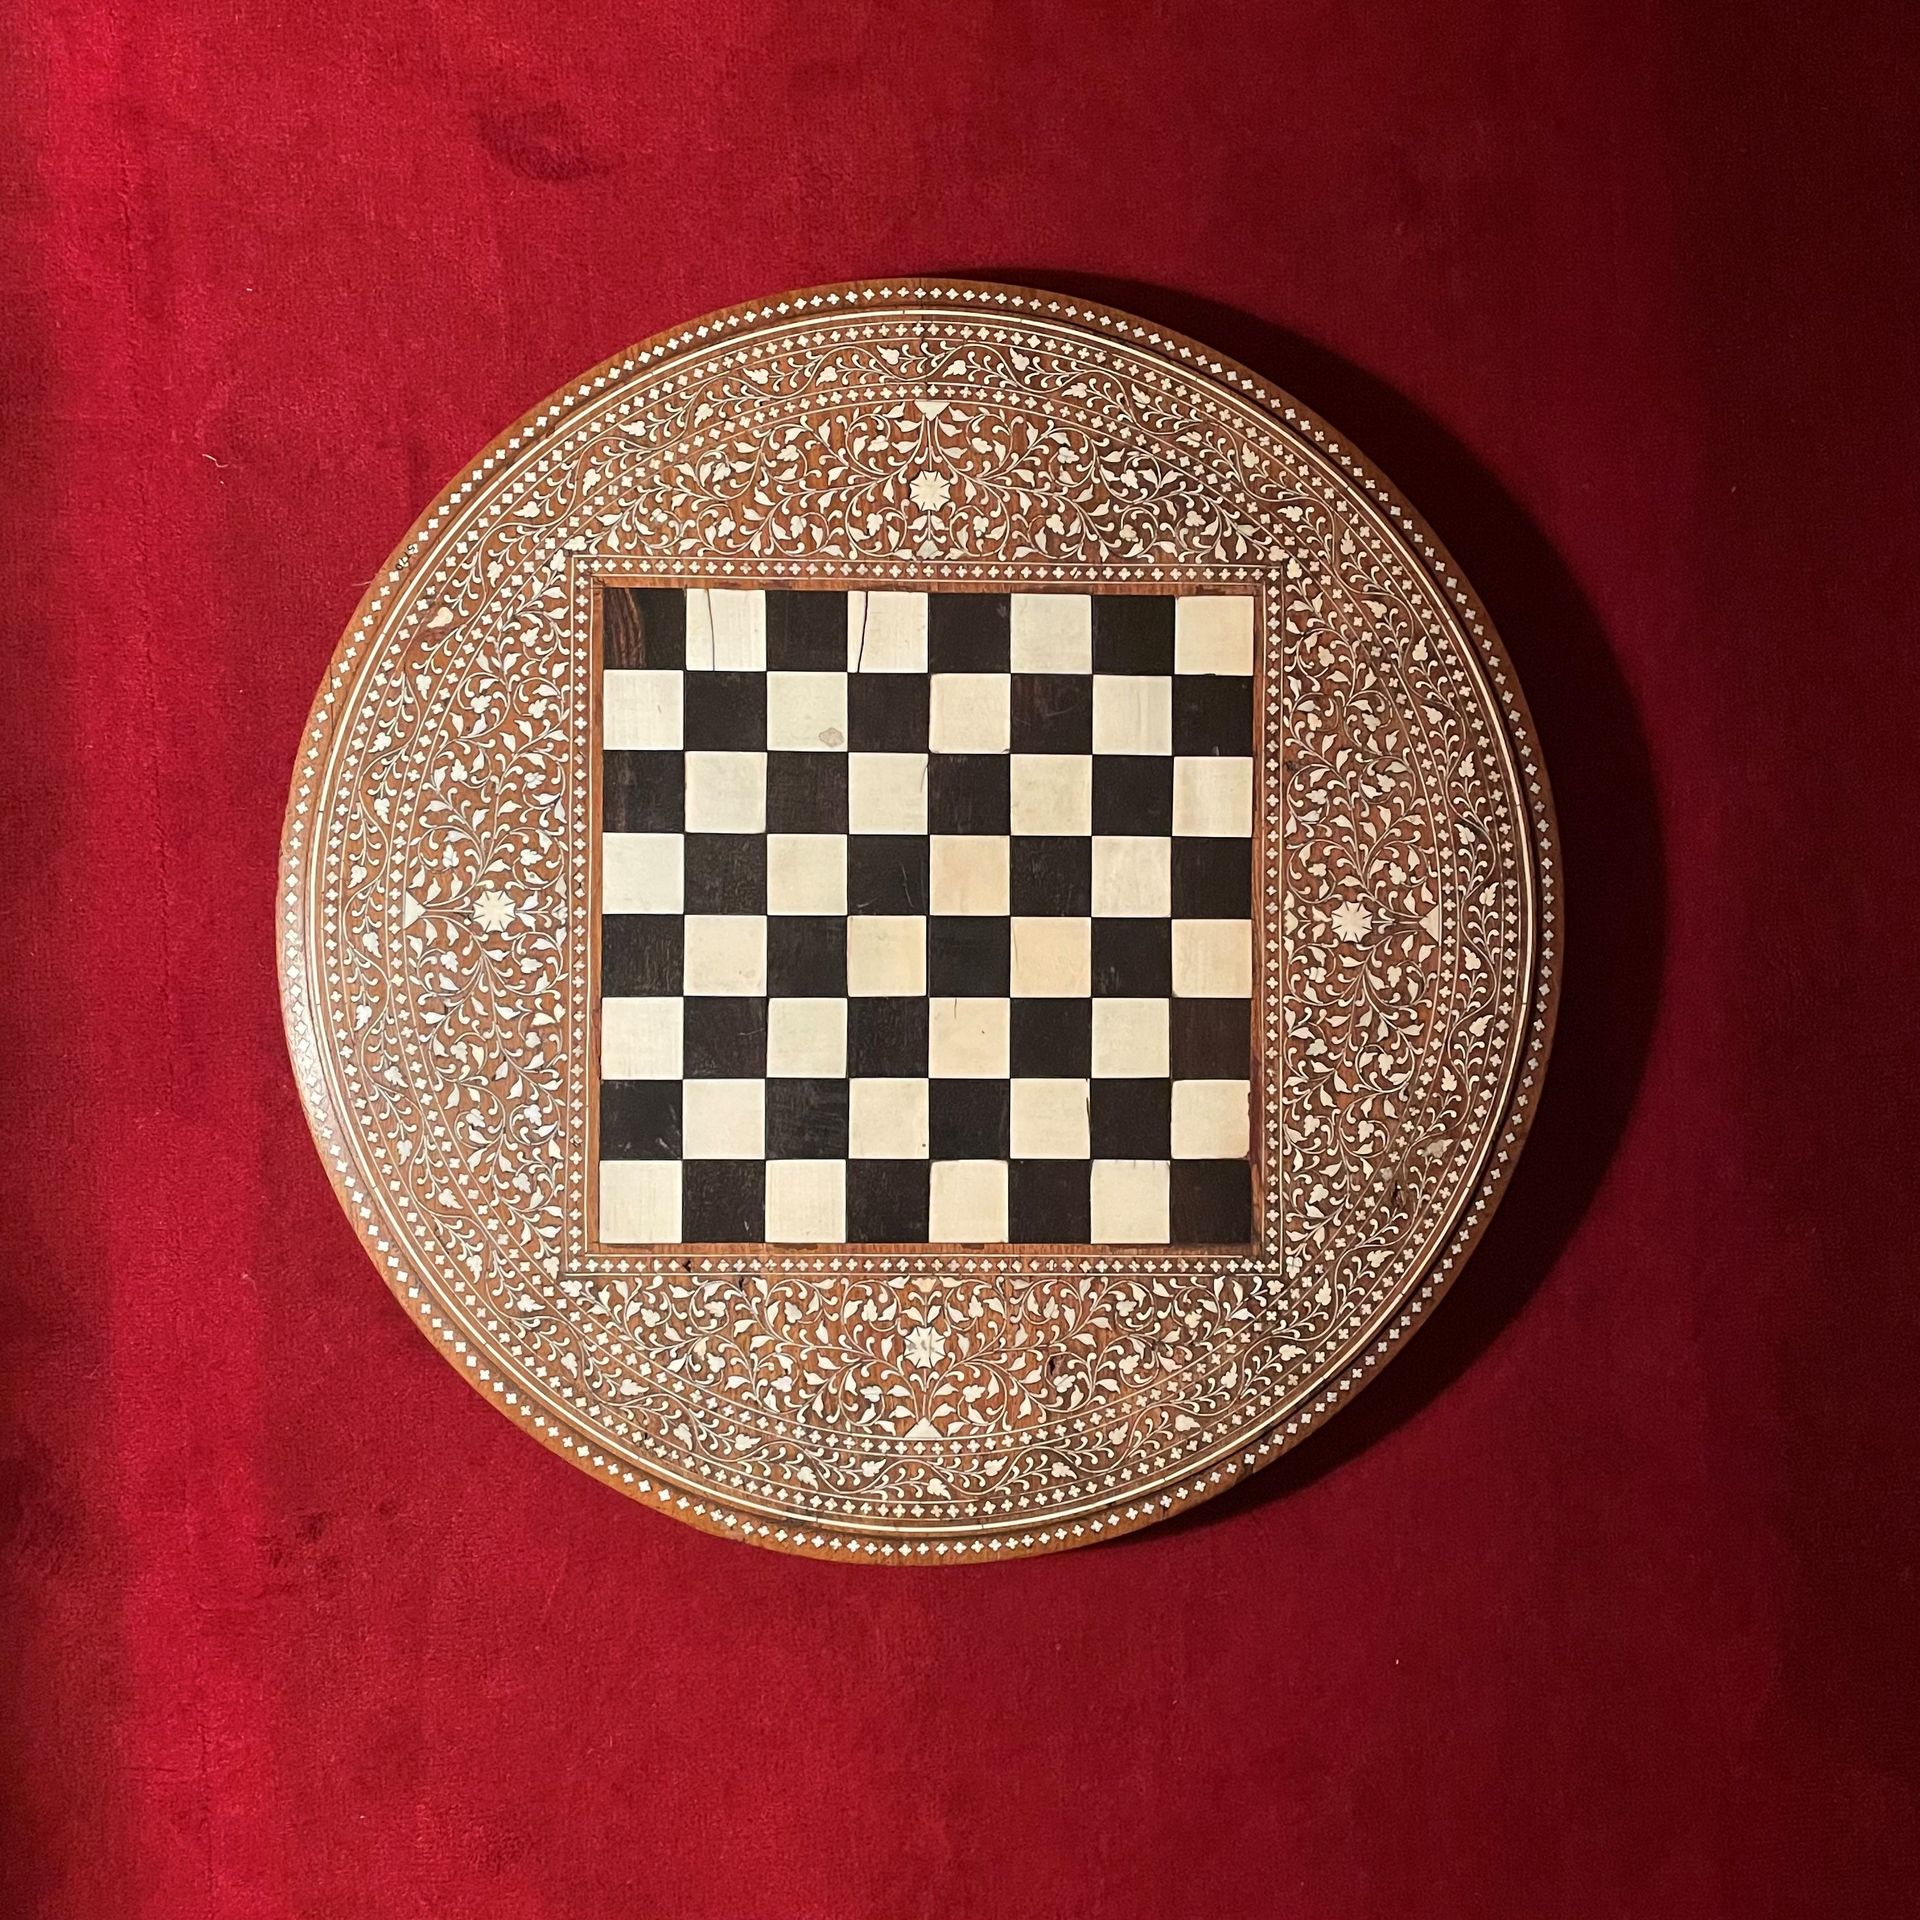 Null 骰子桌

印度，19世纪

镶嵌着象牙和乌木

宽度：60.5厘米

出处：B伯爵夫人和她的家人，法国著名汉学家和收藏家Emile Senart（18&hellip;